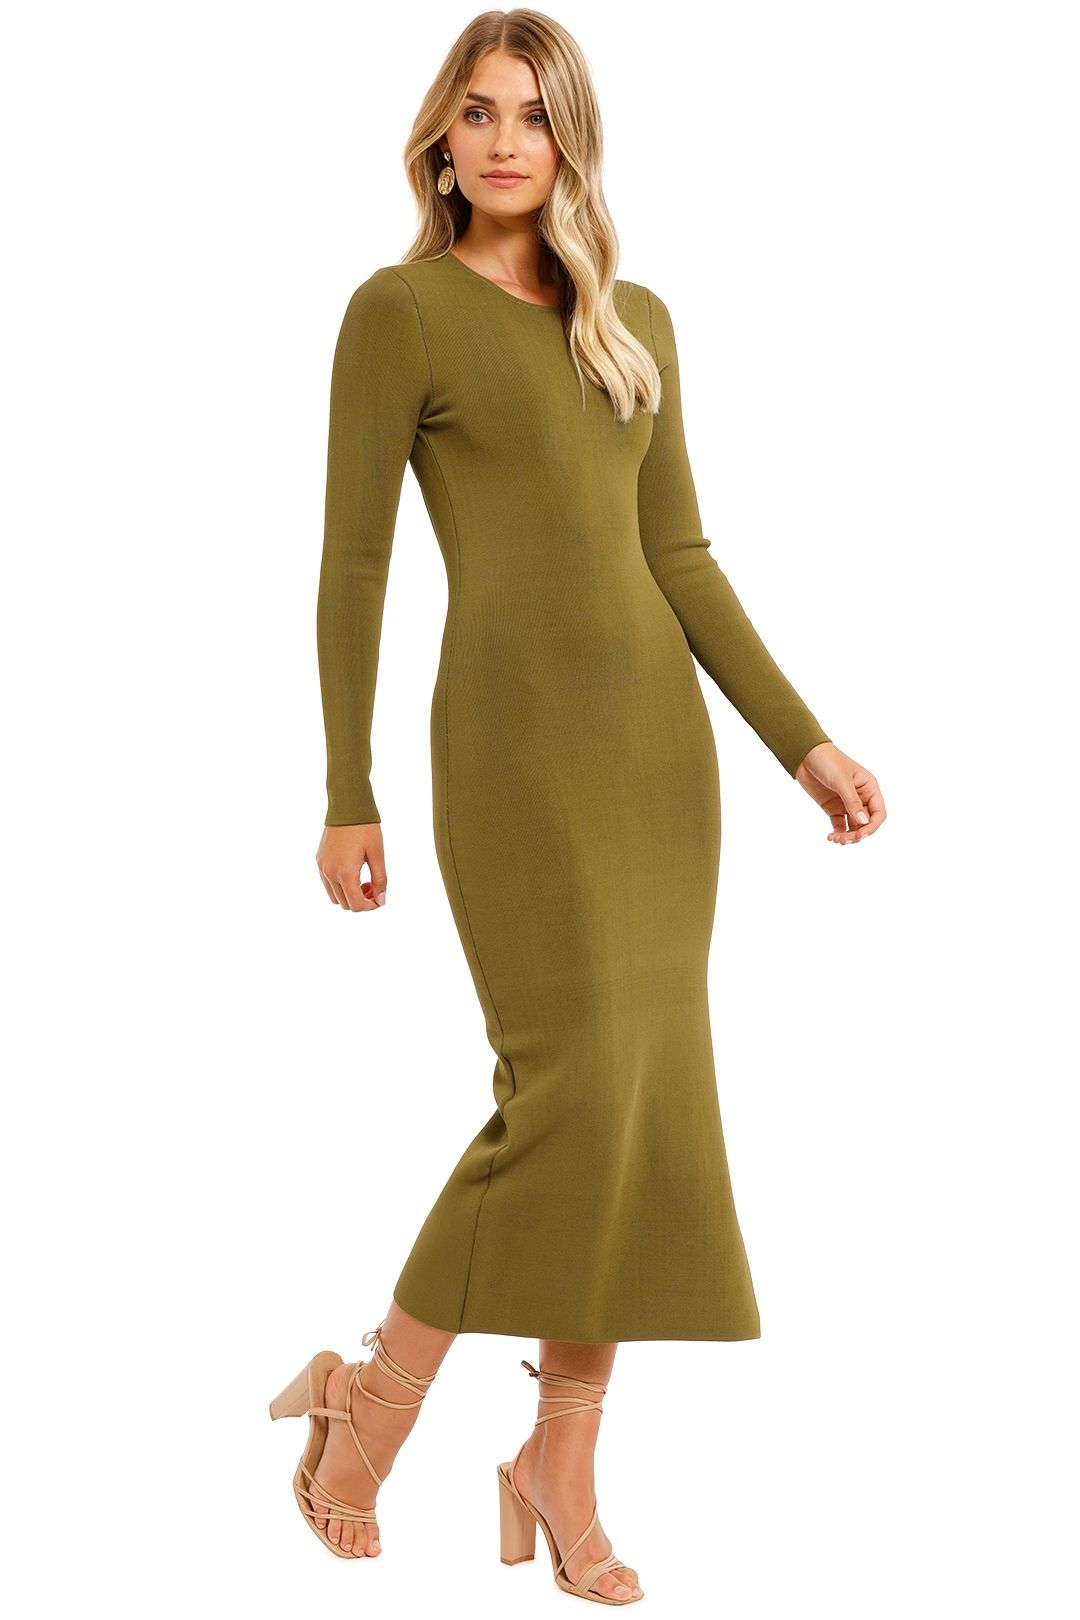 Hire Long Sleeve Backless Midi Dress in Olive | Shona Joy | GlamCorner